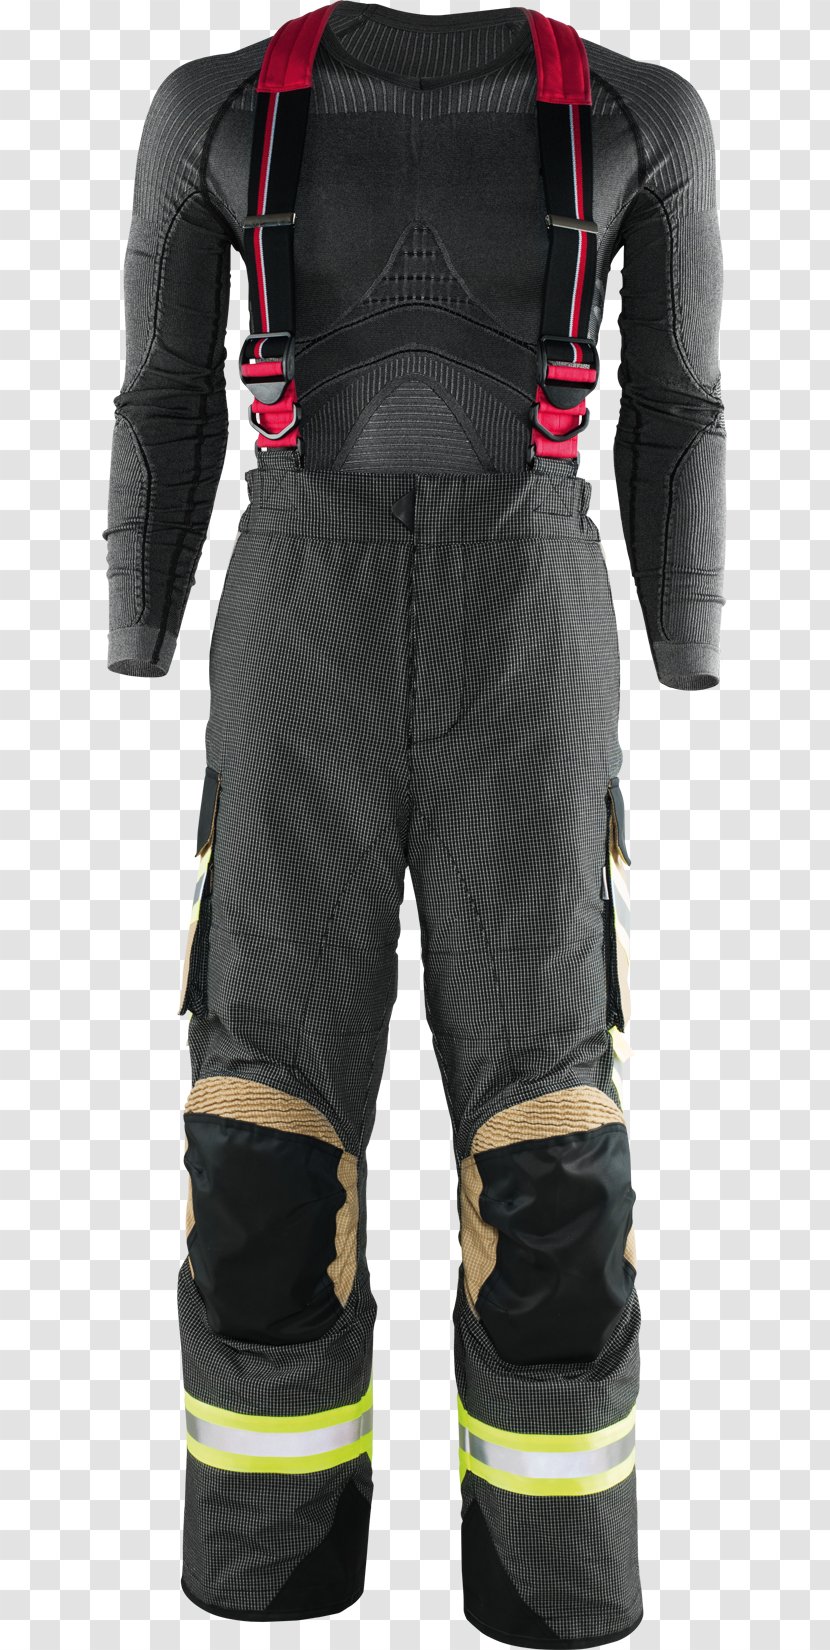 Firefighter Fire Department Jacket Clothing - Heat - Hose Equipment Transparent PNG